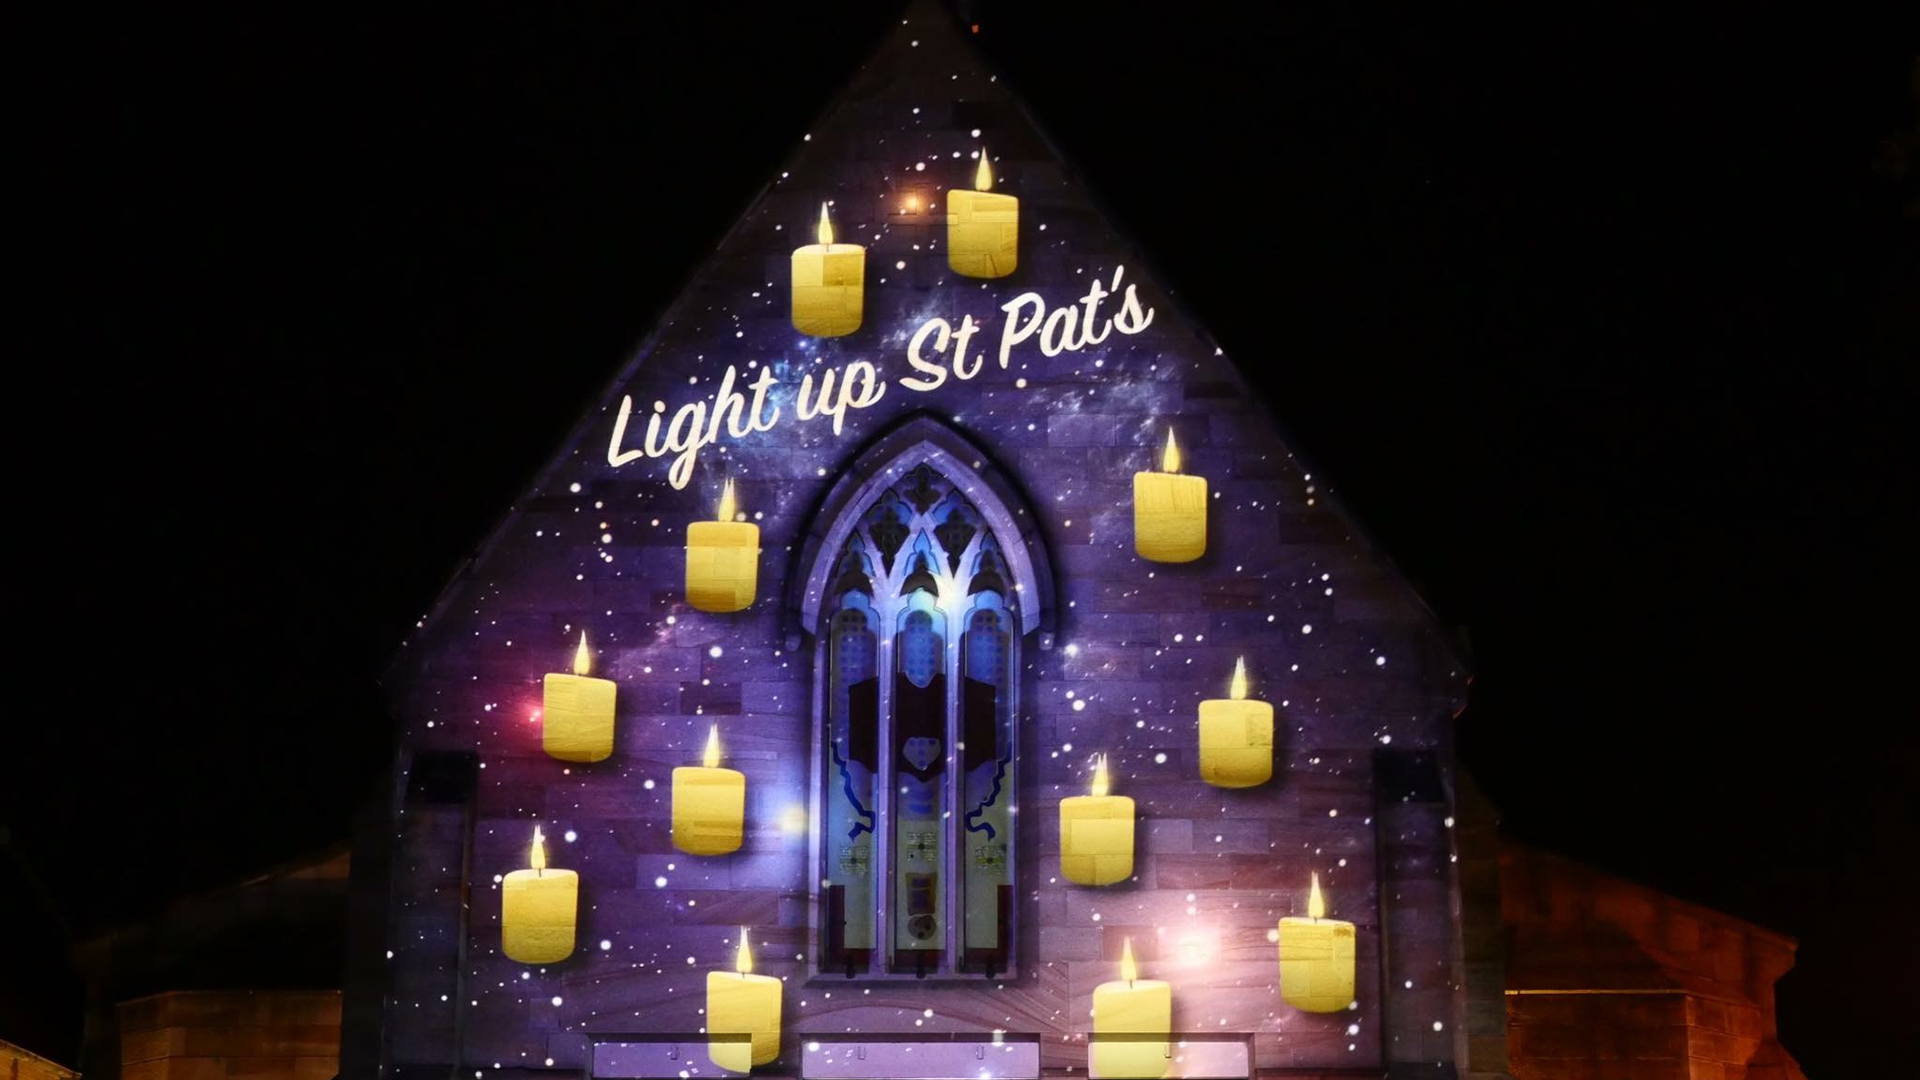 Light Up St Pat’s features in Parramatta’s Winterlight Festival